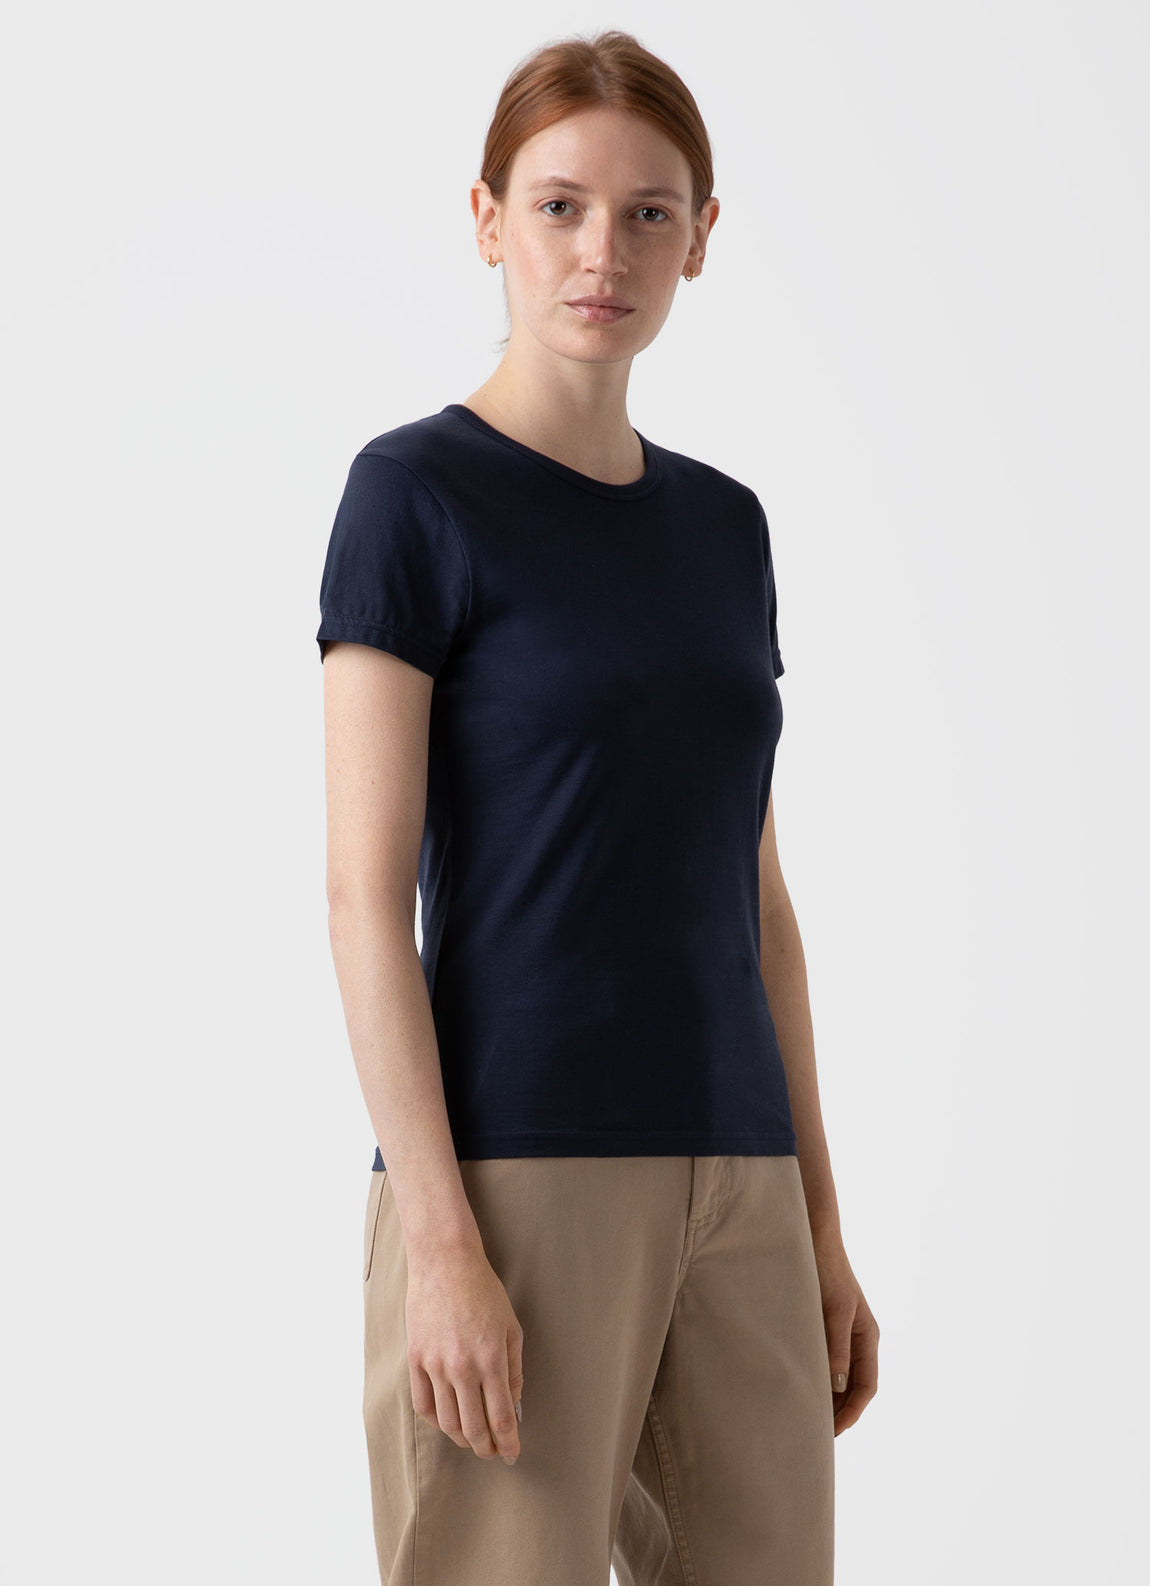 Women's Classic T-shirt in Navy | Sunspel